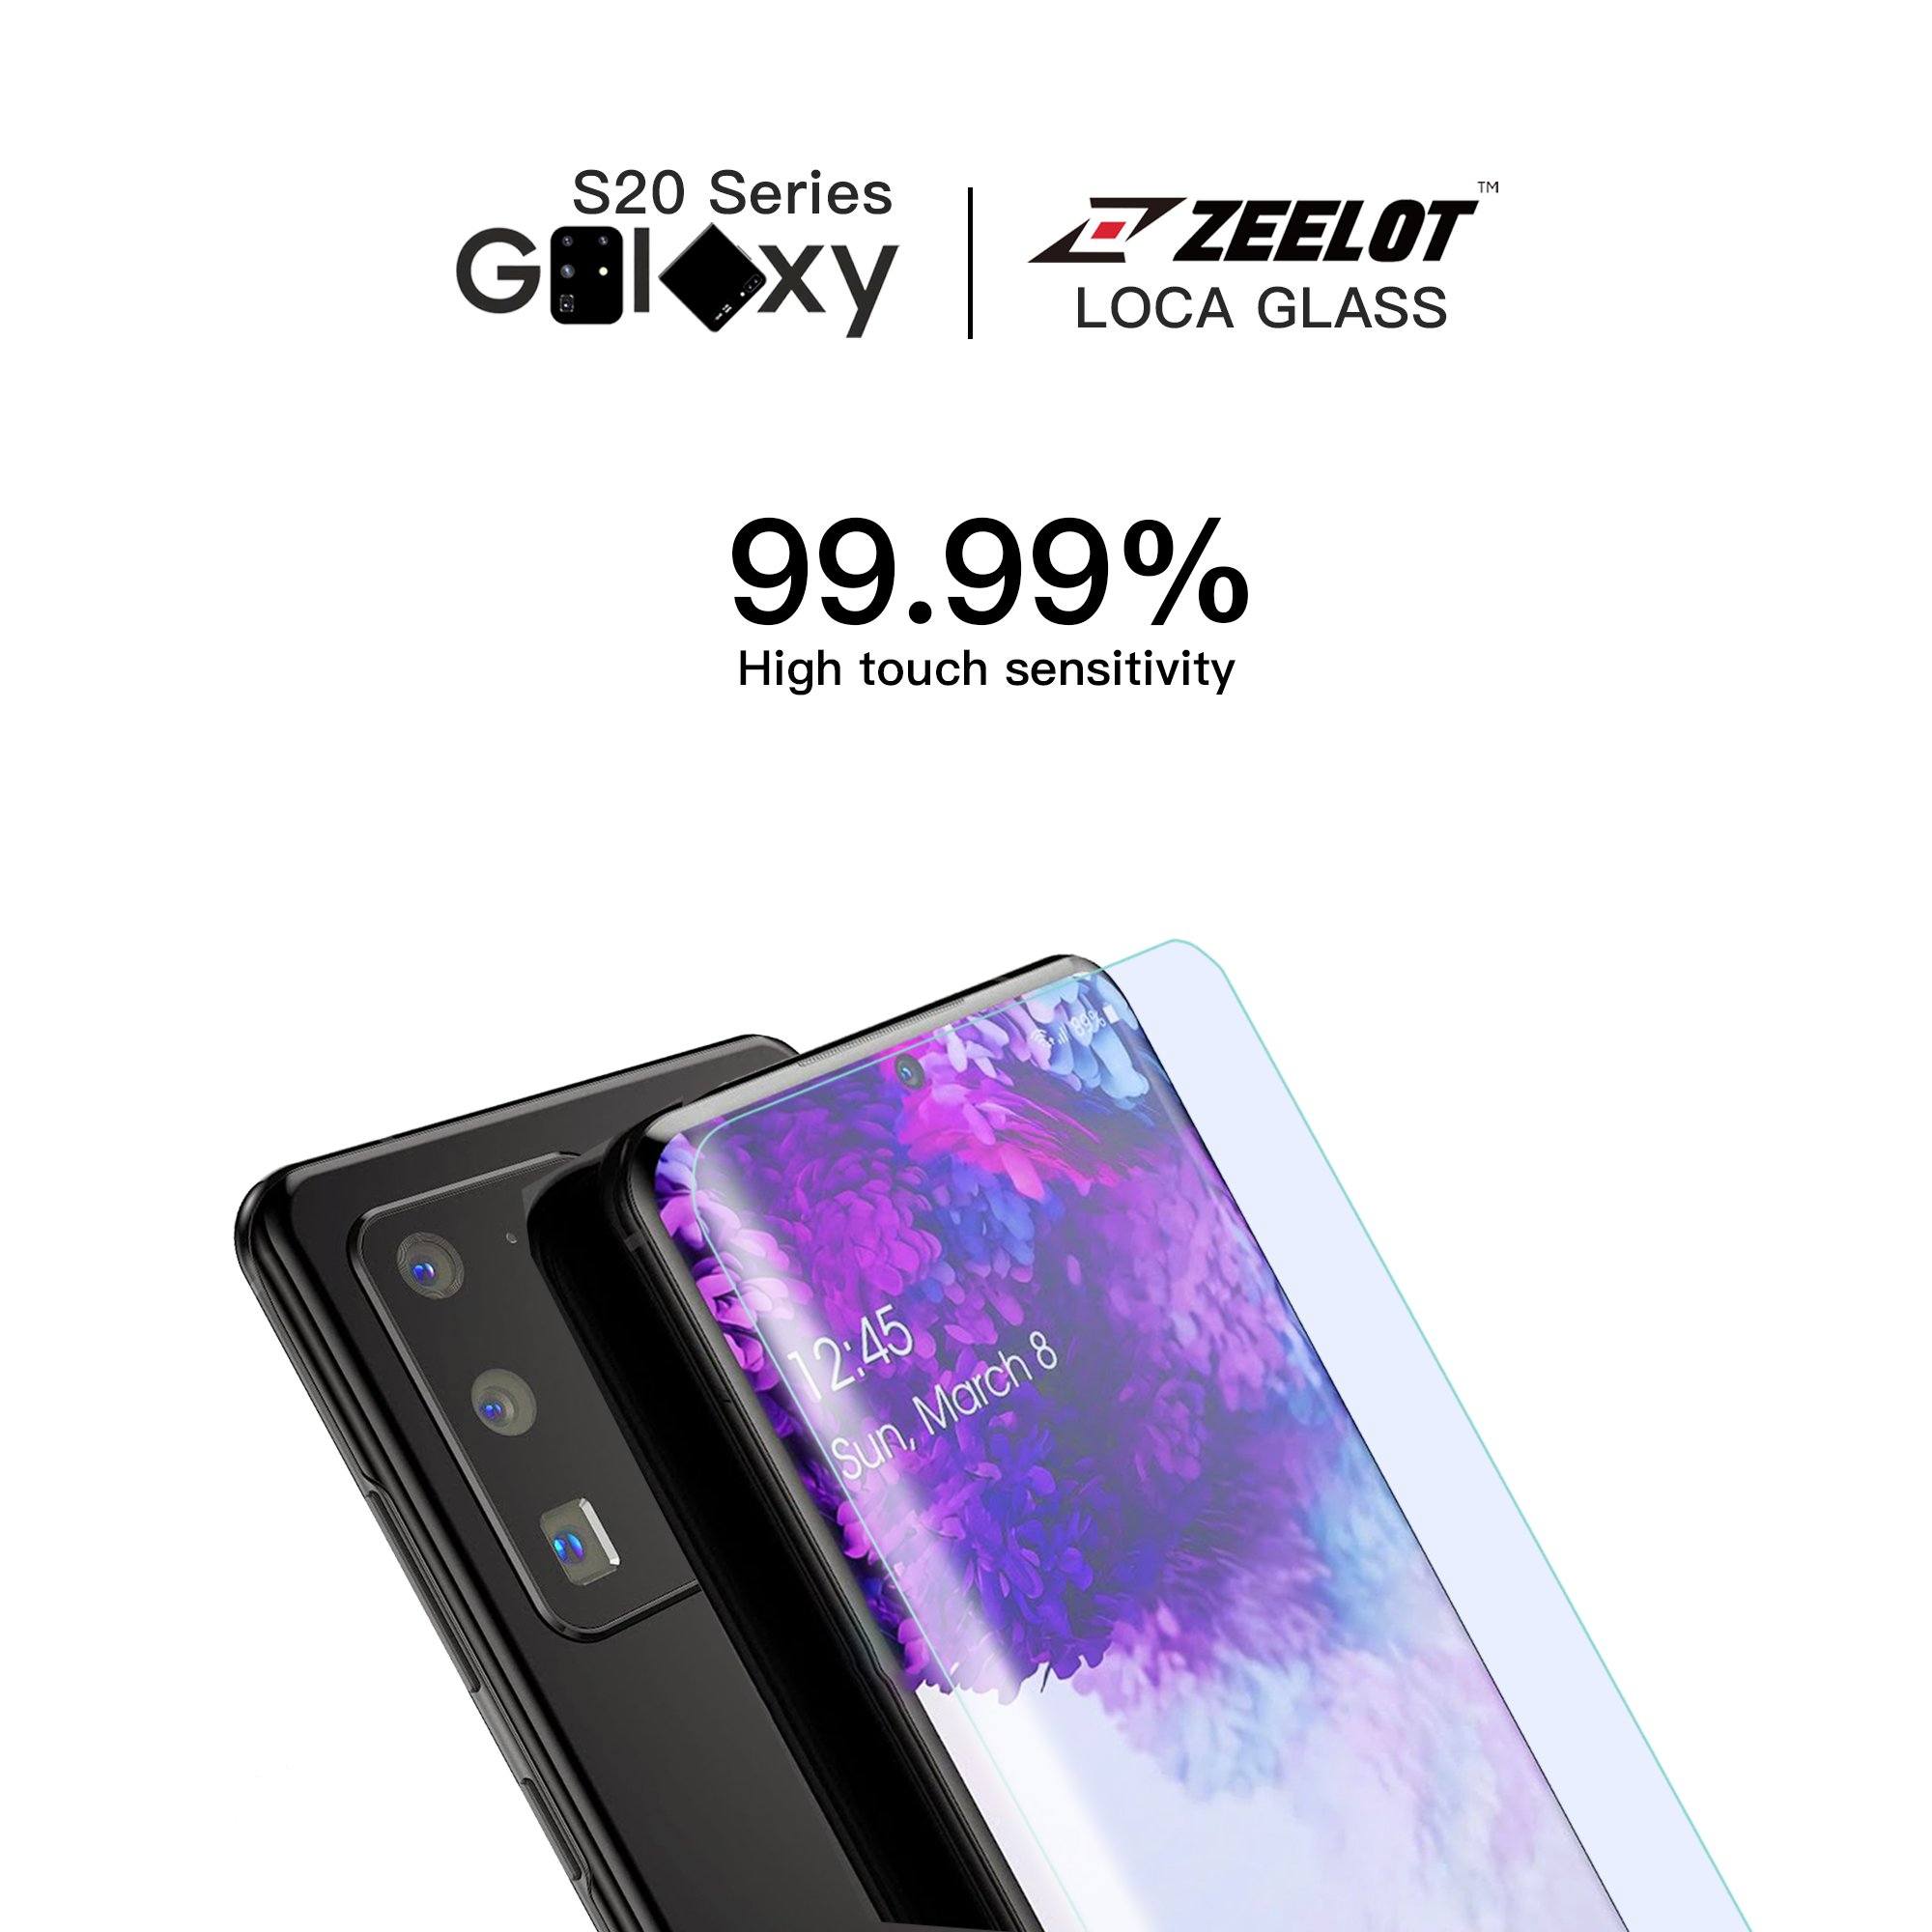 ZEELOT PureGlass 3D Anti Blue LOCA Corning Tempered Glass Screen Protector for Samsung Galaxy S20 Ultra Anti-Blue Ray Loca Glue Zeelot 